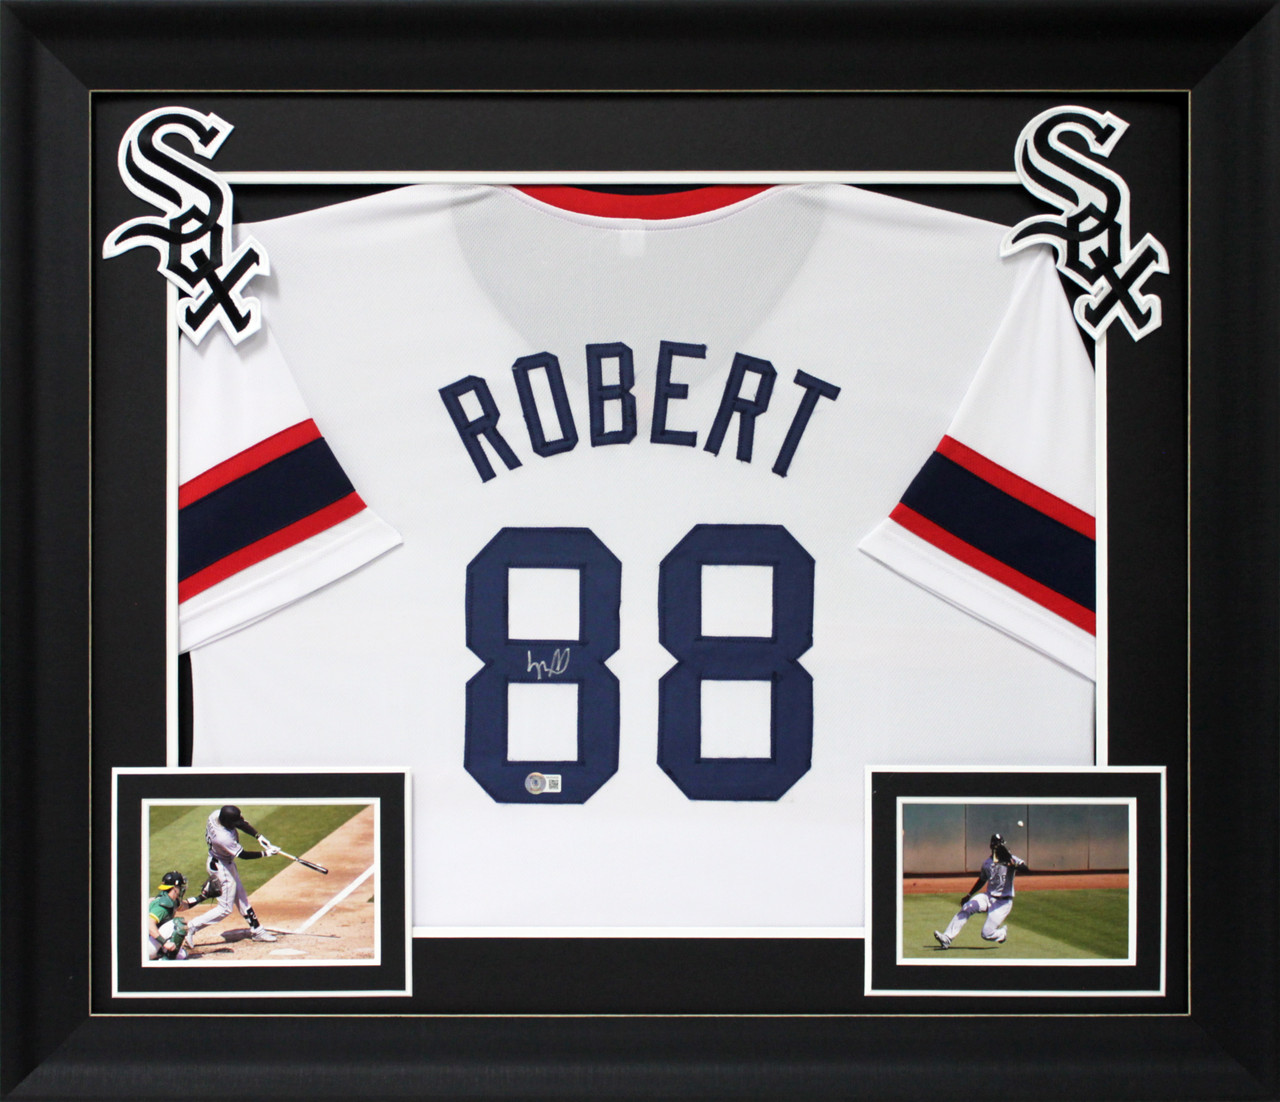 Chicago White Sox Luis Robert jersey